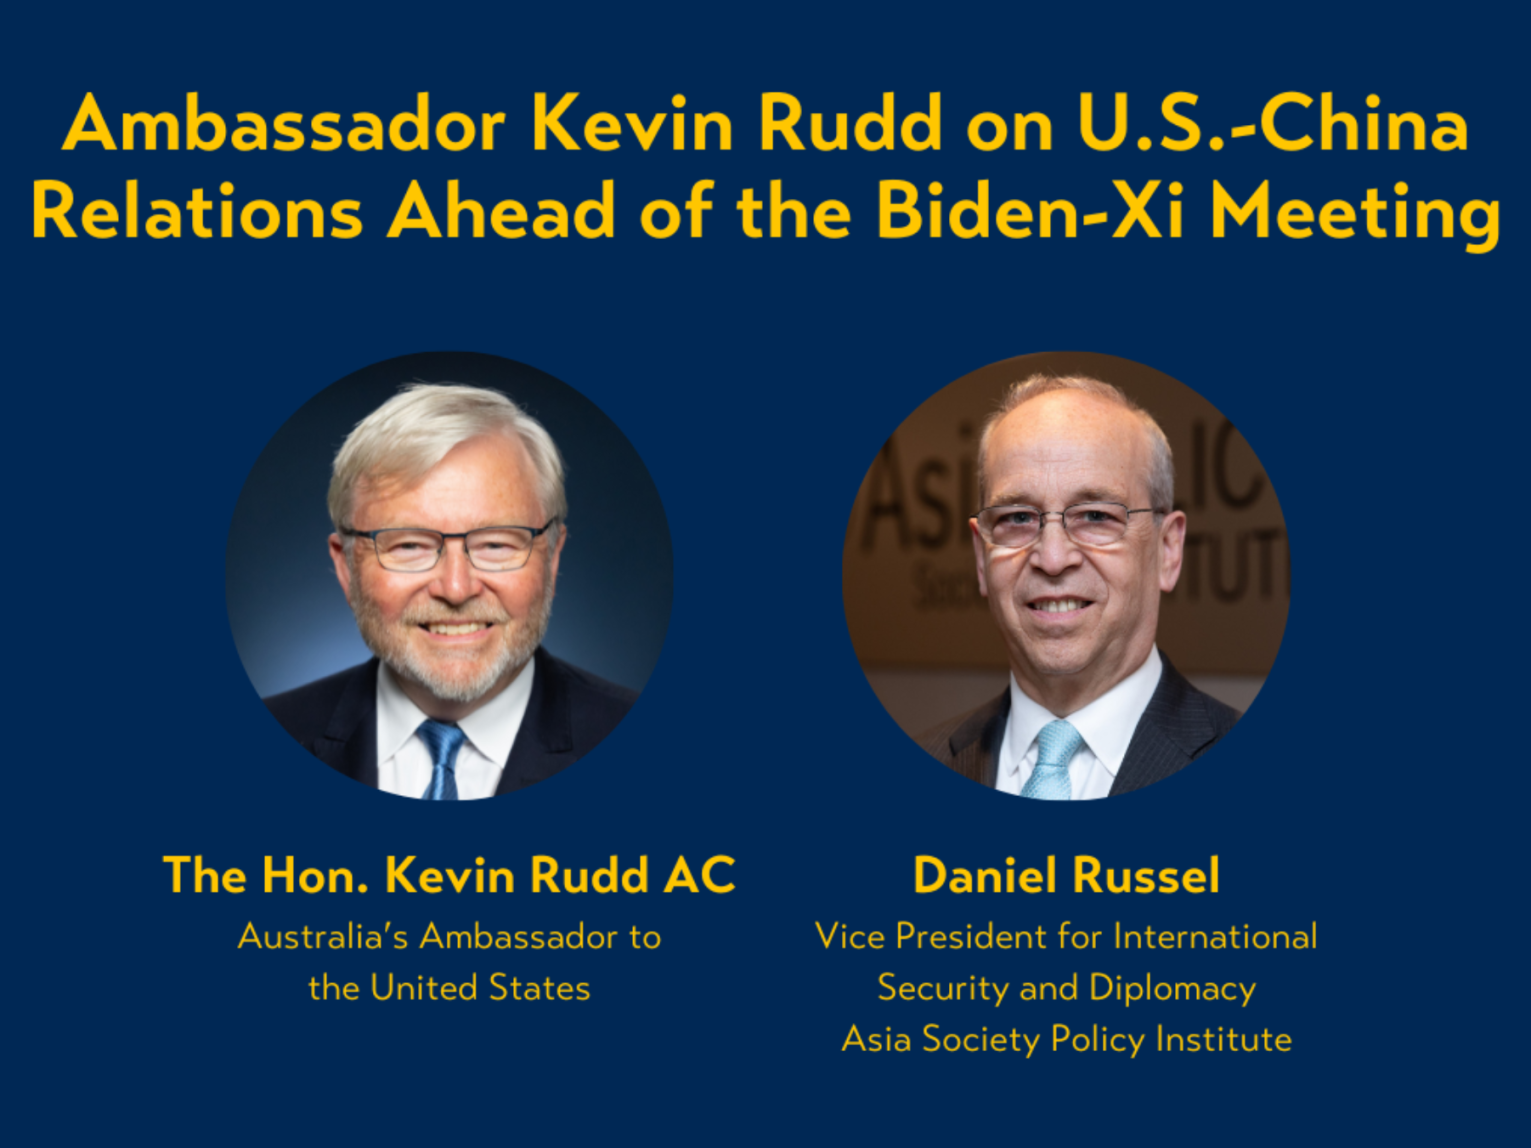 Ambassador Kevin Rudd on U.S.-China Relations Ahead of the Biden-Xi Meeting